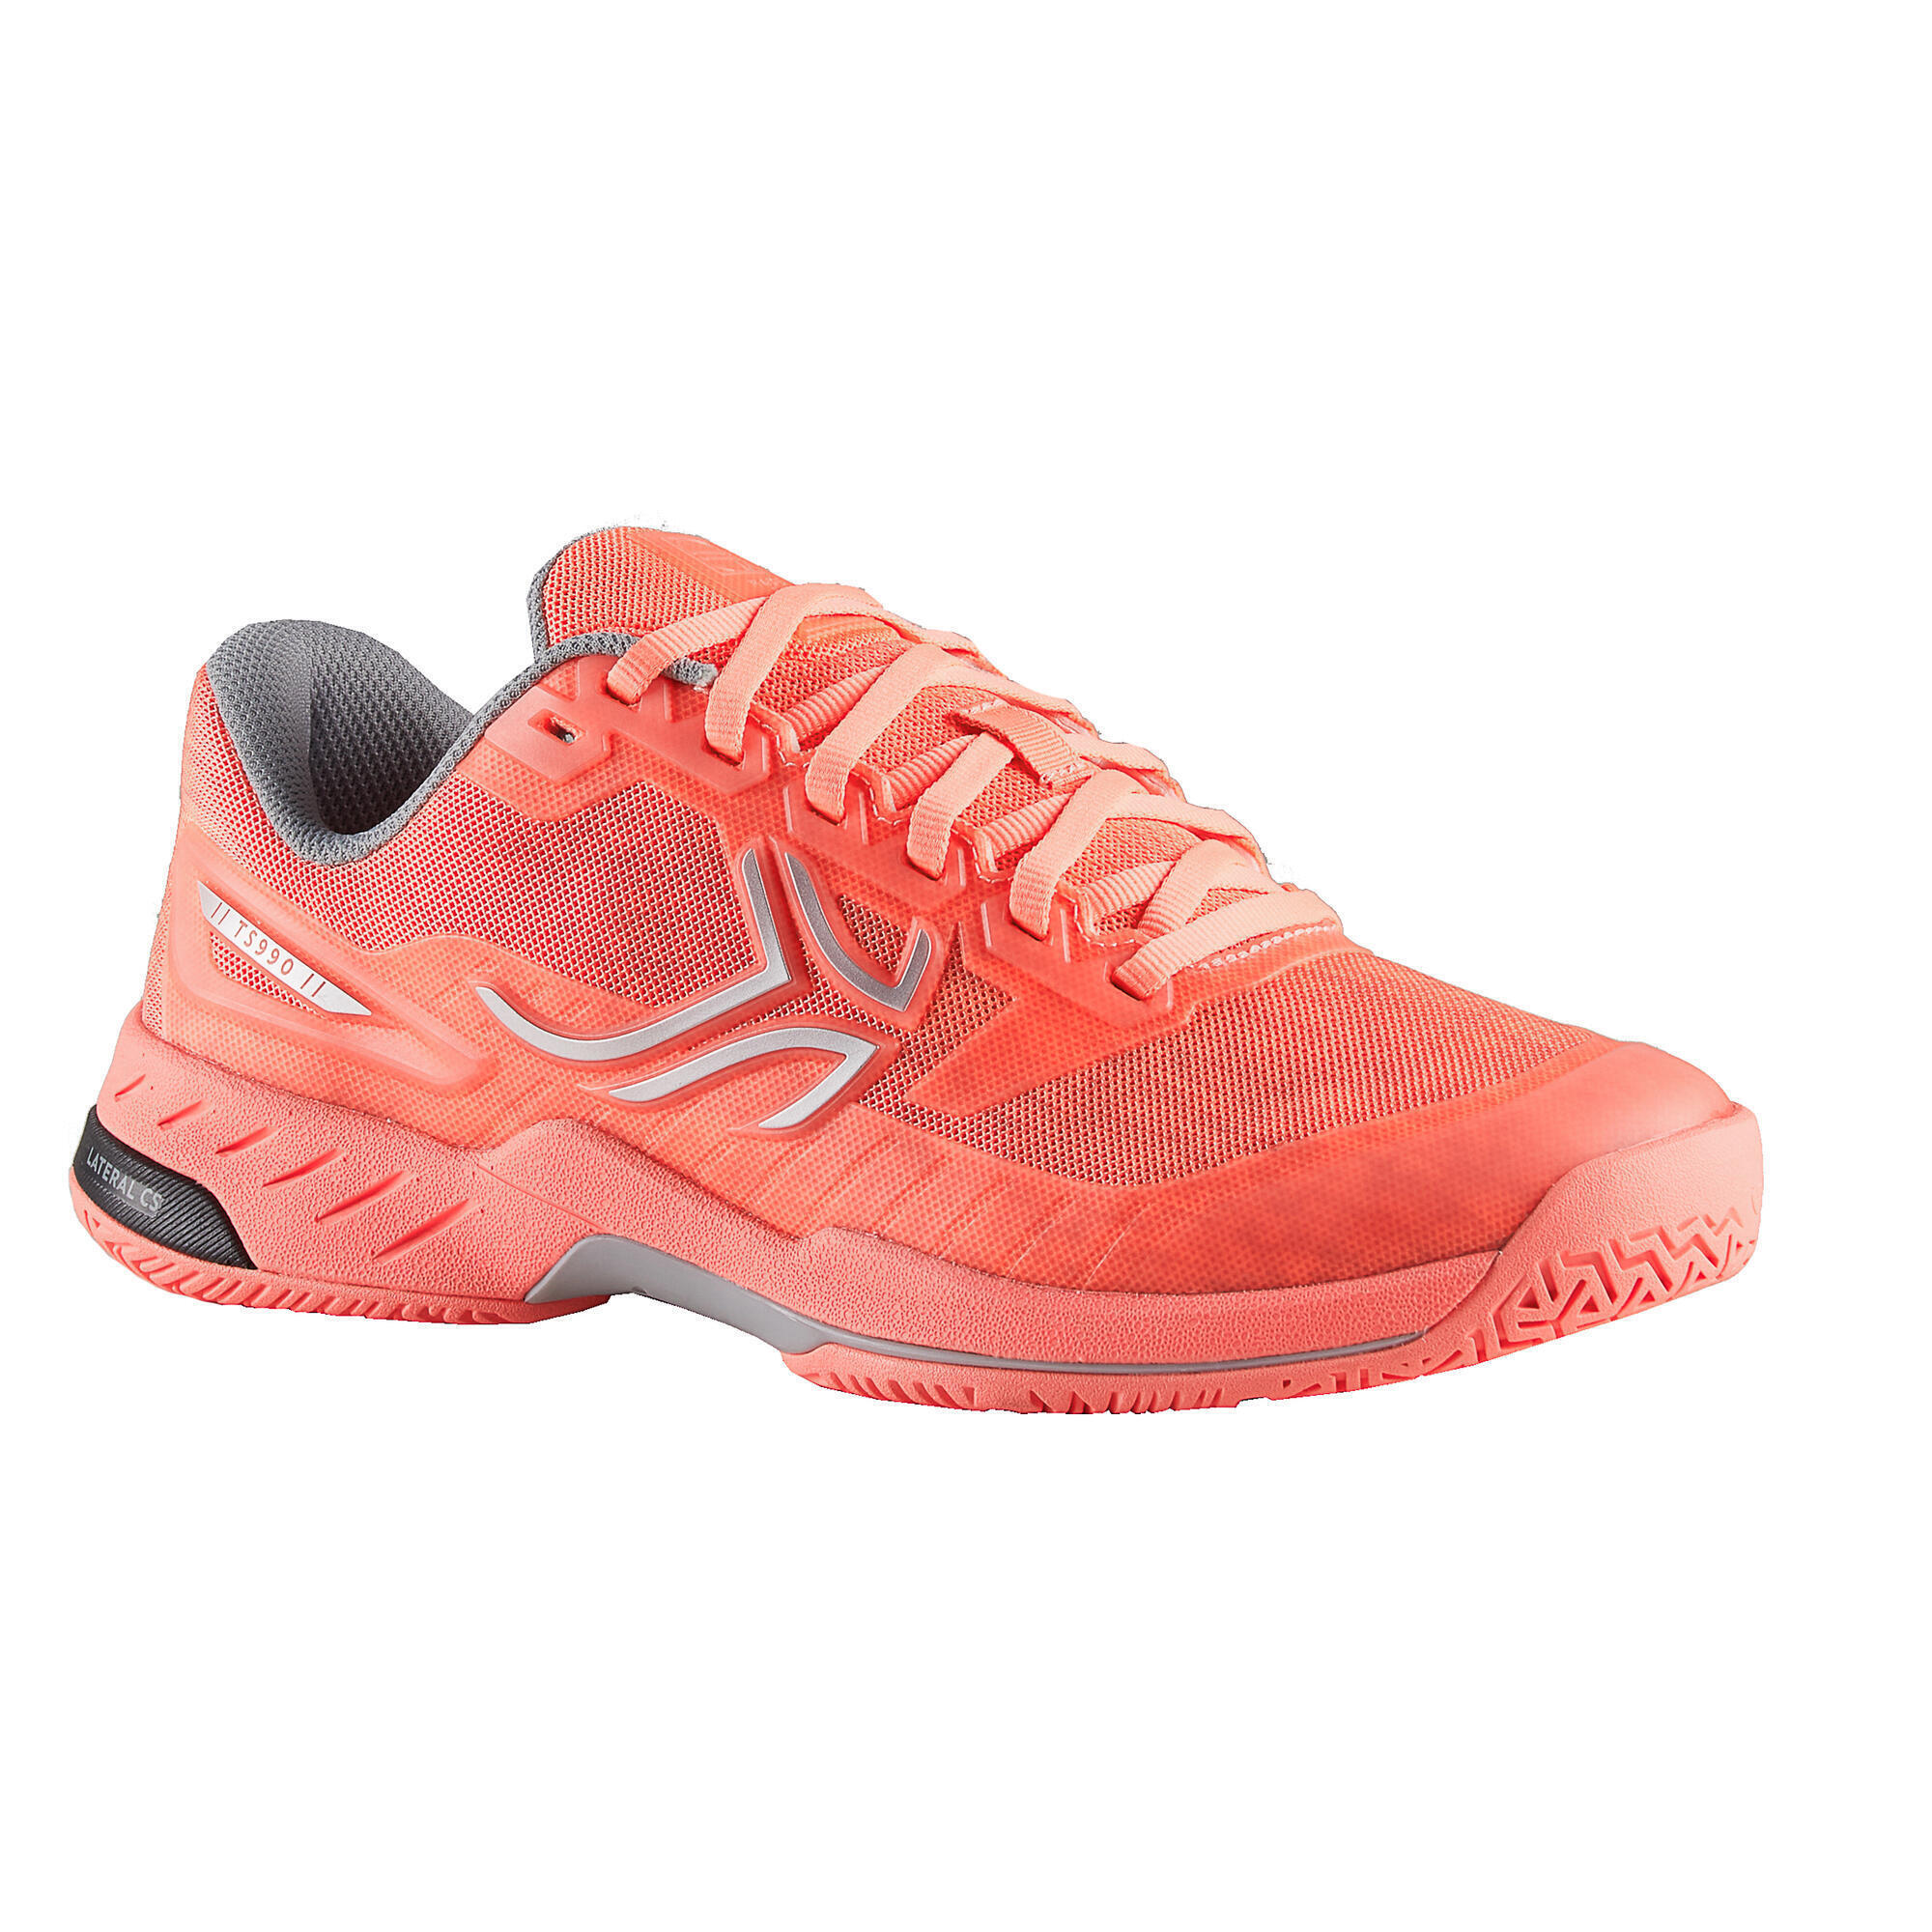 Women's Tennis Shoes TS990 - Coral 1/8